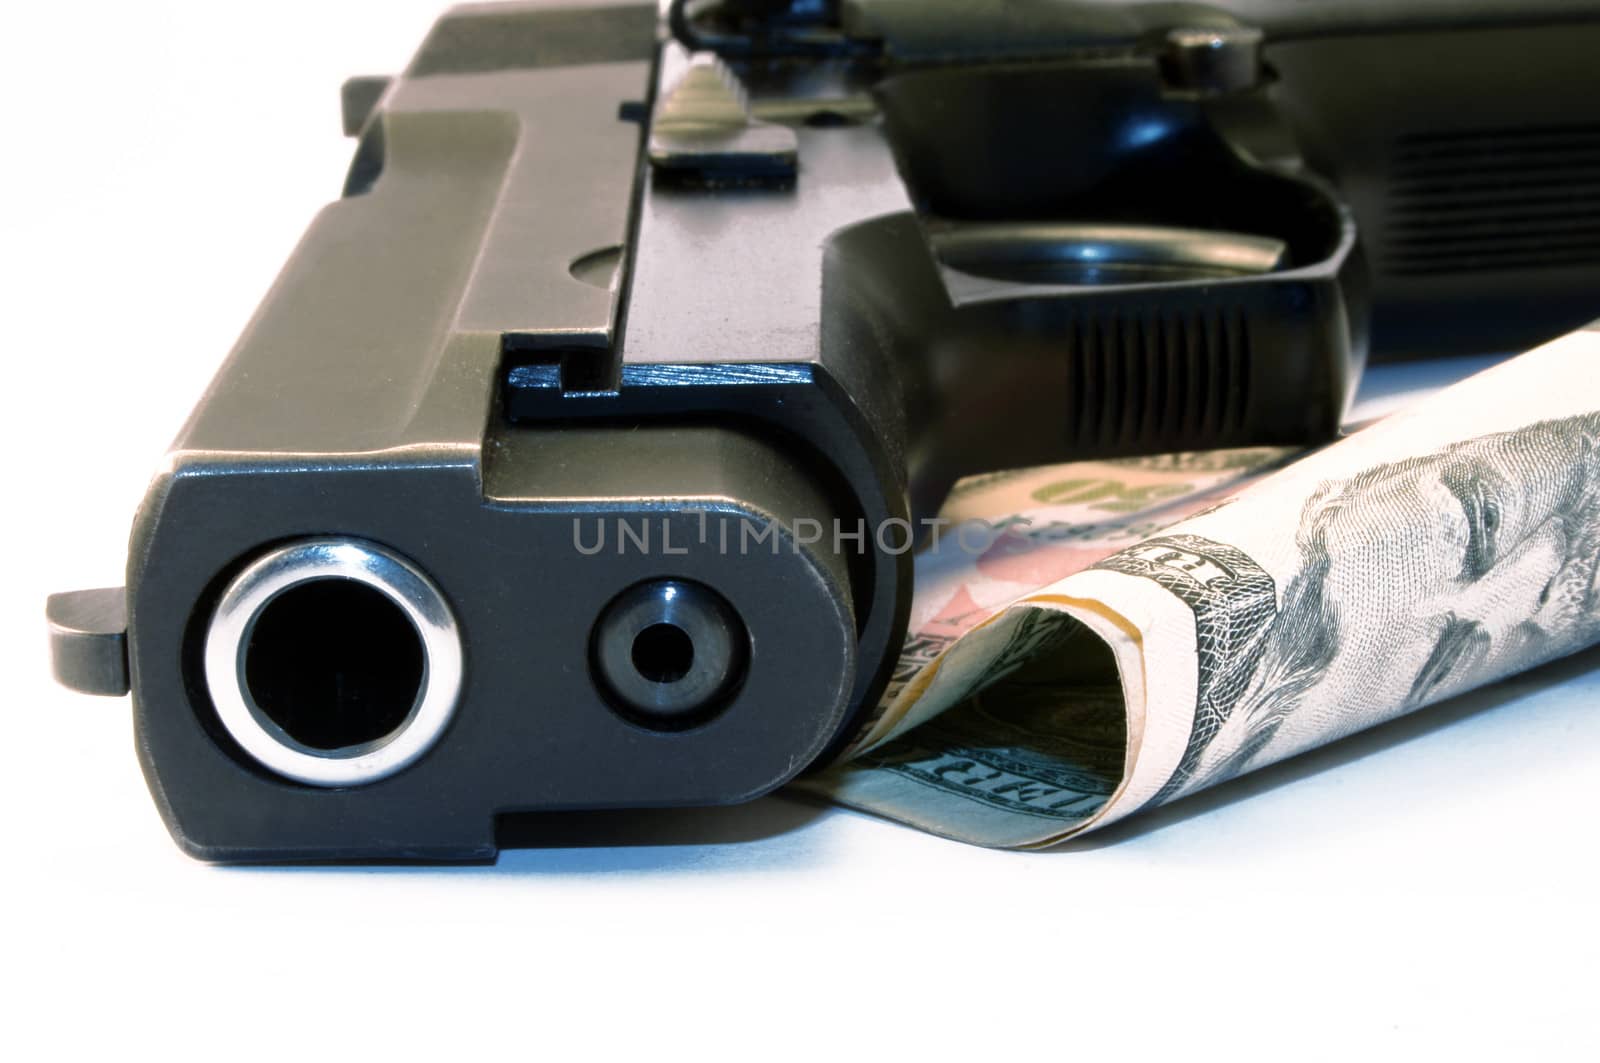 Big gun and US dollars